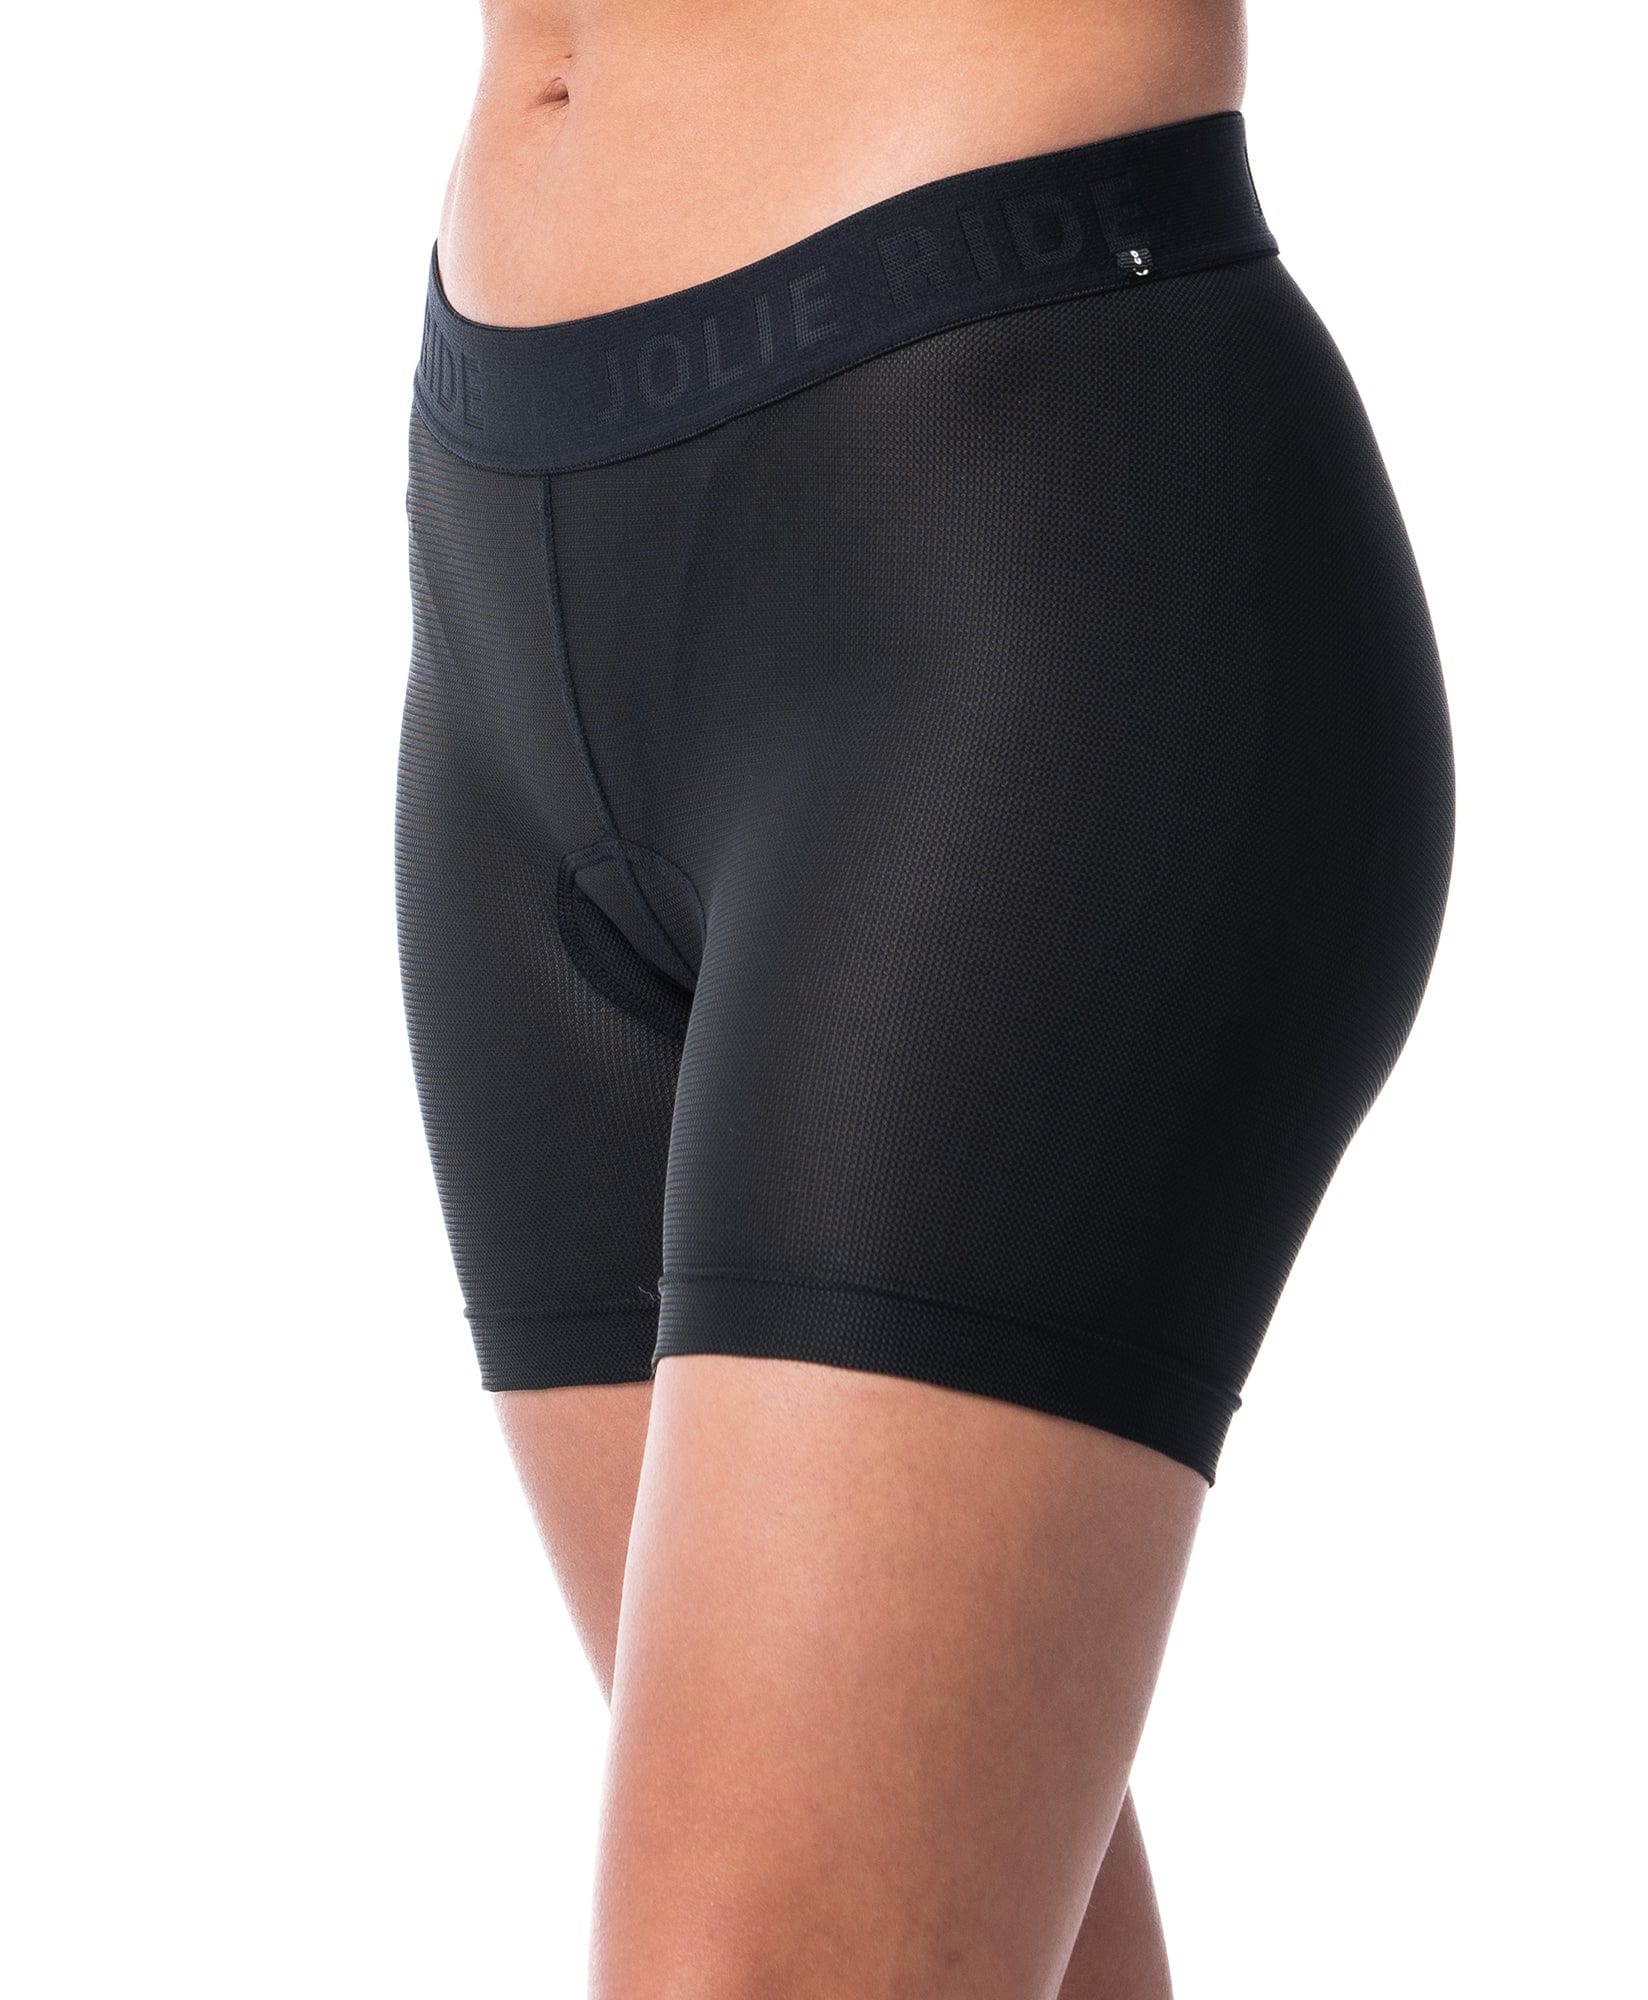 JolieRide MTB shorts mtb shorts with detachable padded mesh cycling short 2024